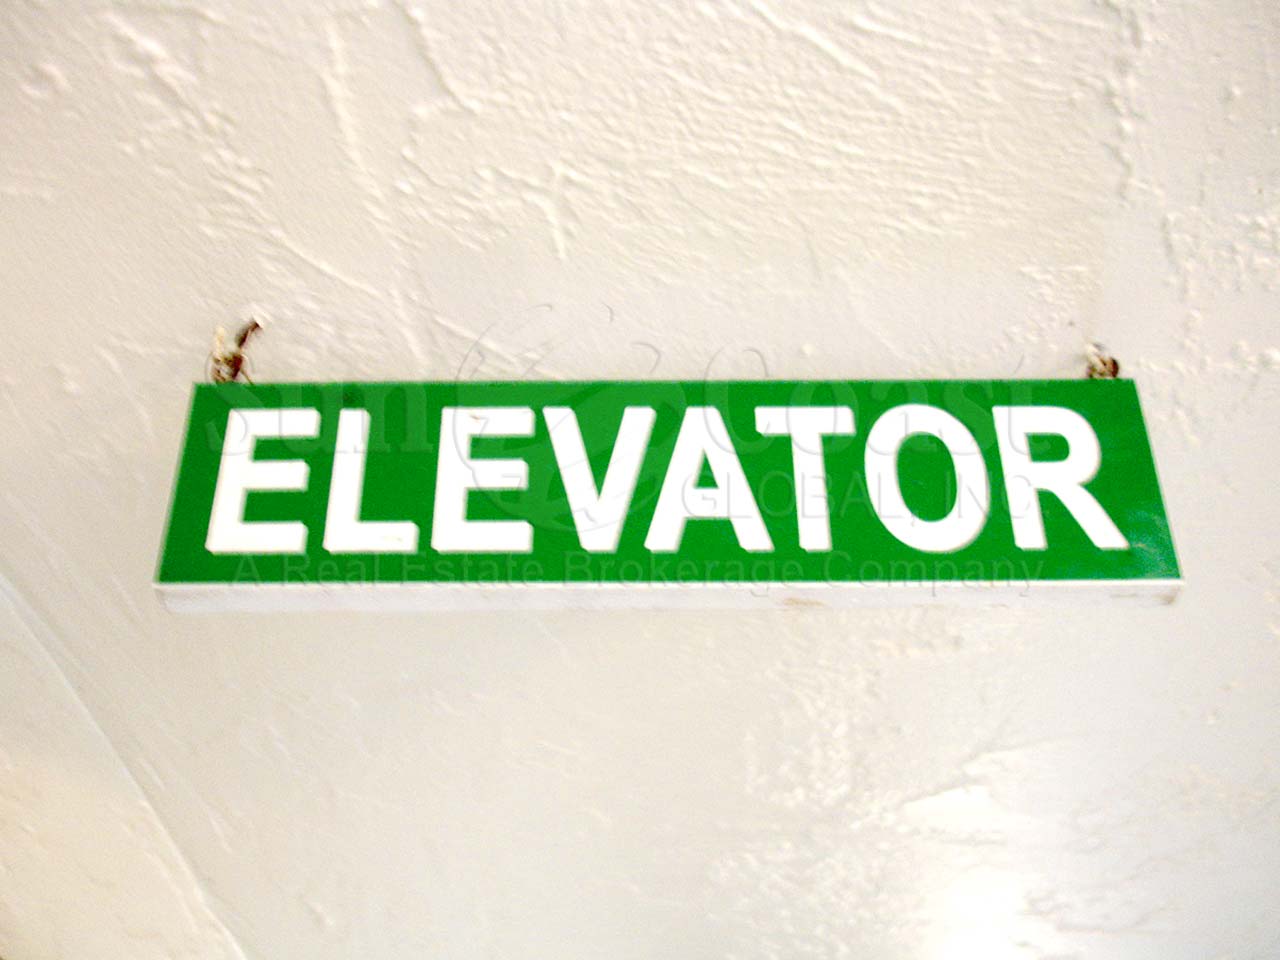 Orleans Elevator